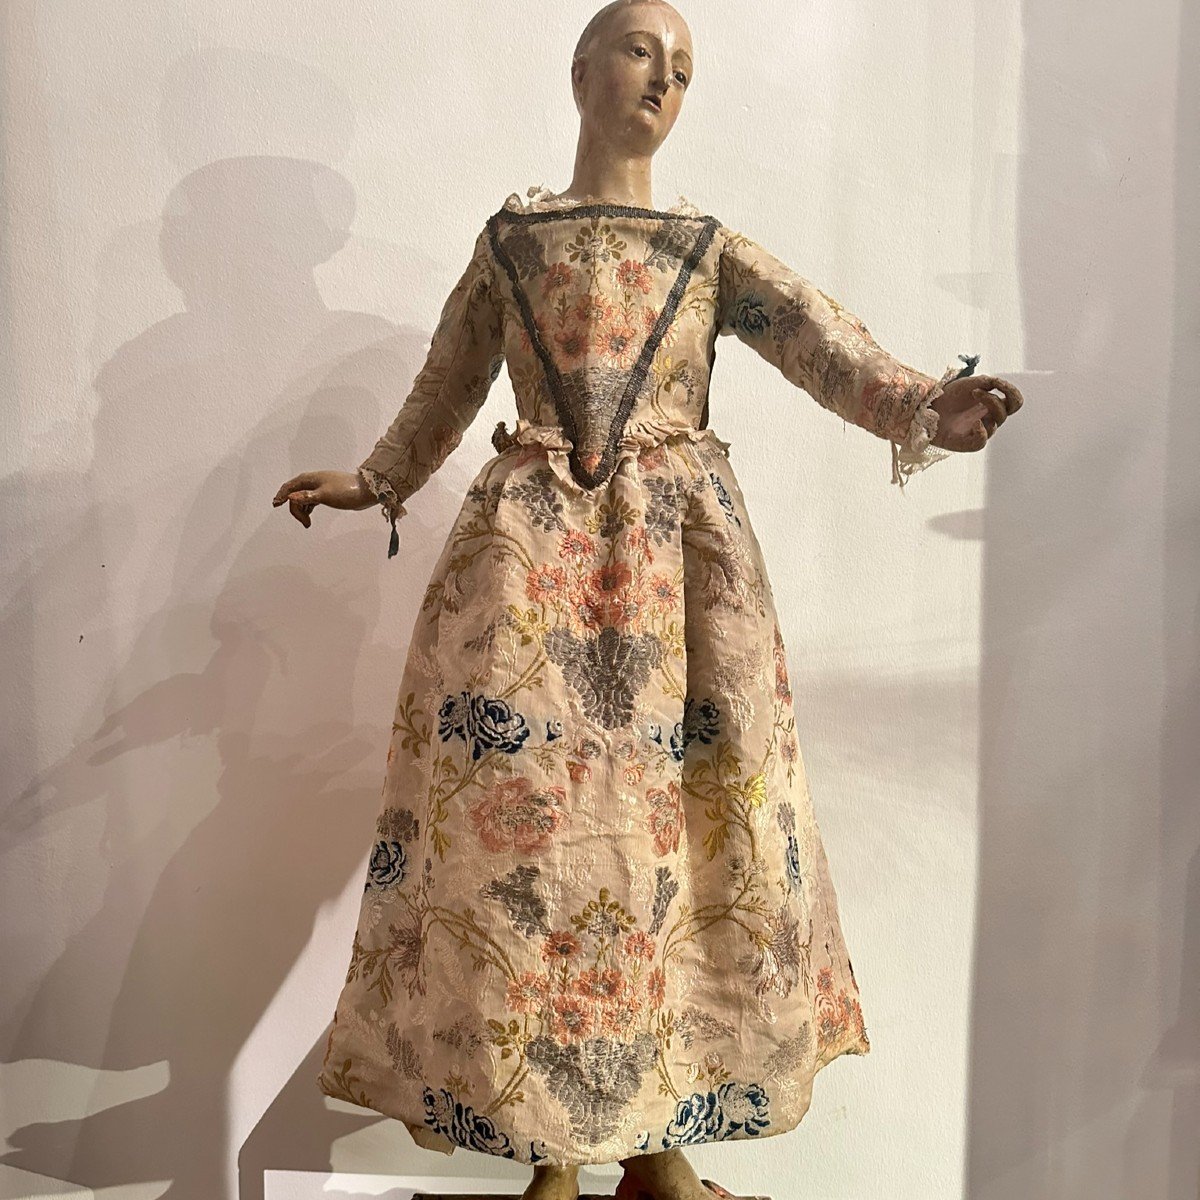 Capipote 18th Century. In Period Costume 